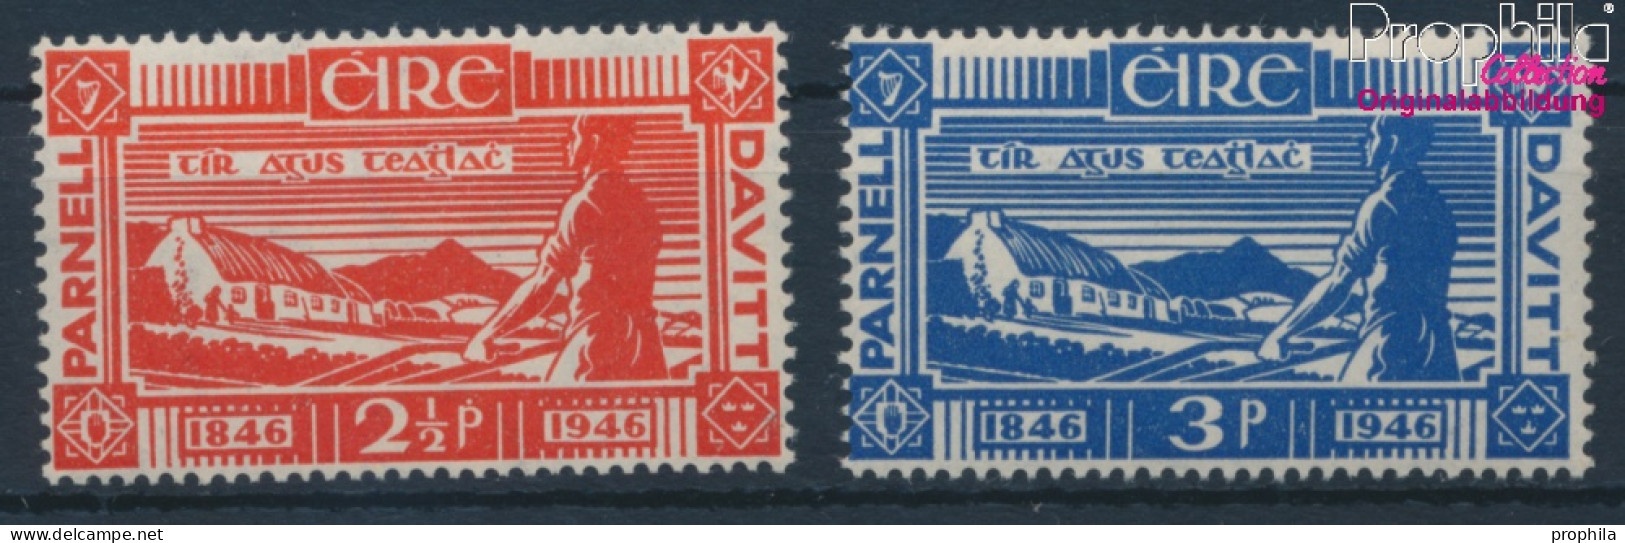 Irland Postfrisch Landreformer 1946 Landreformer  (10398335 - Neufs